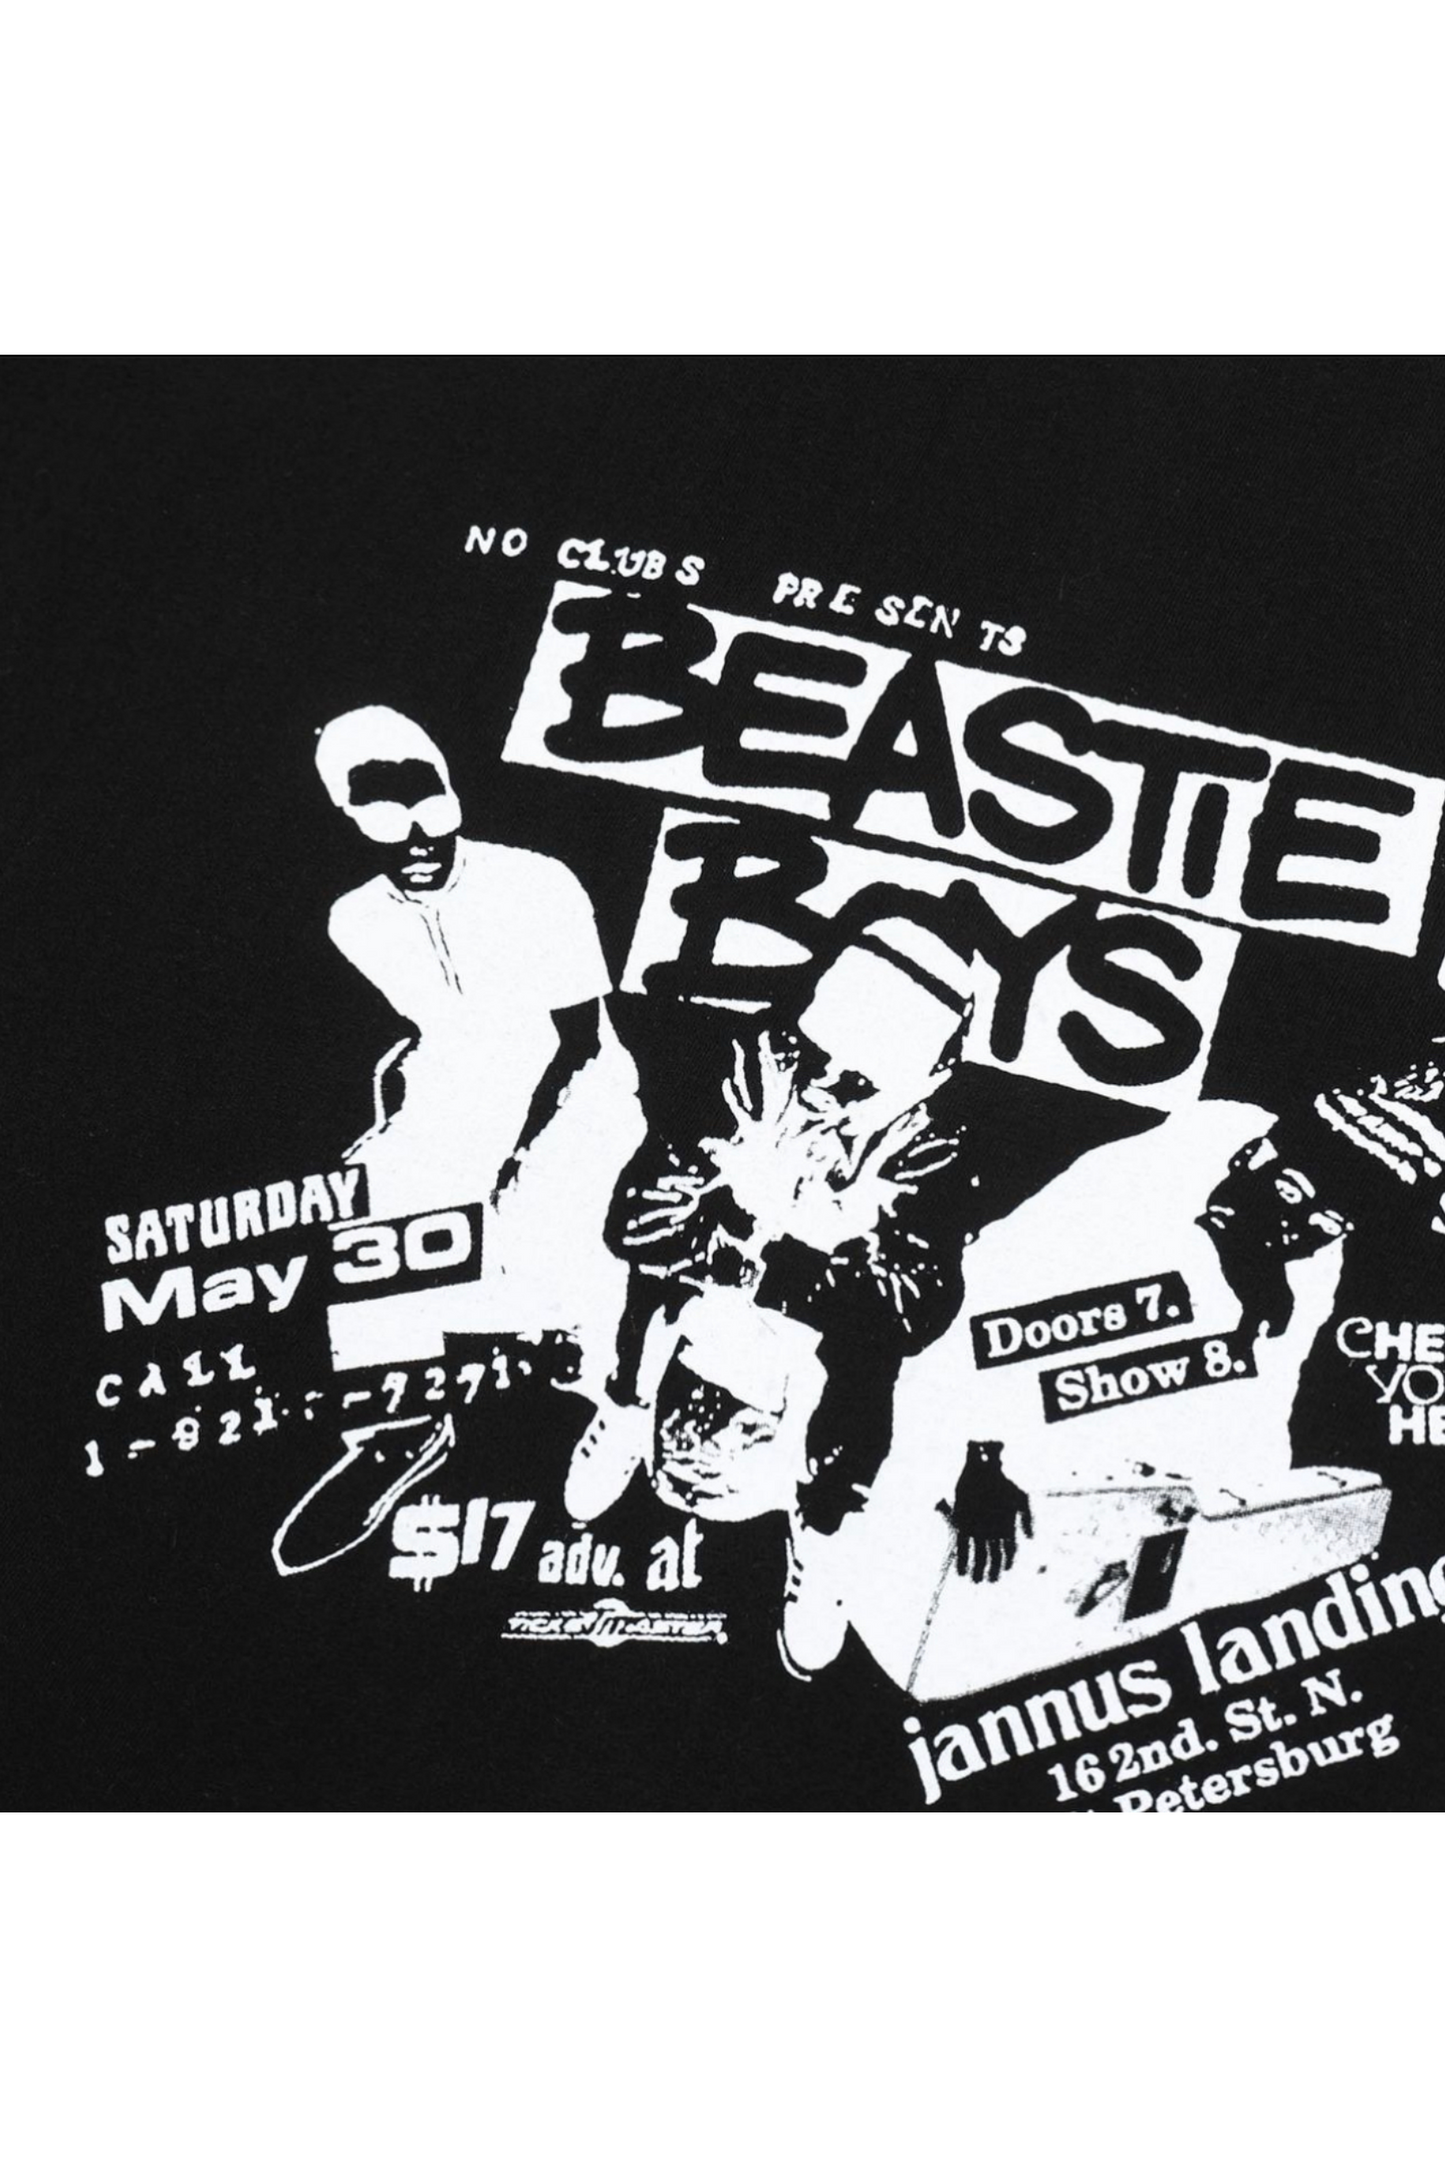 Beastie Boys 印花T恤